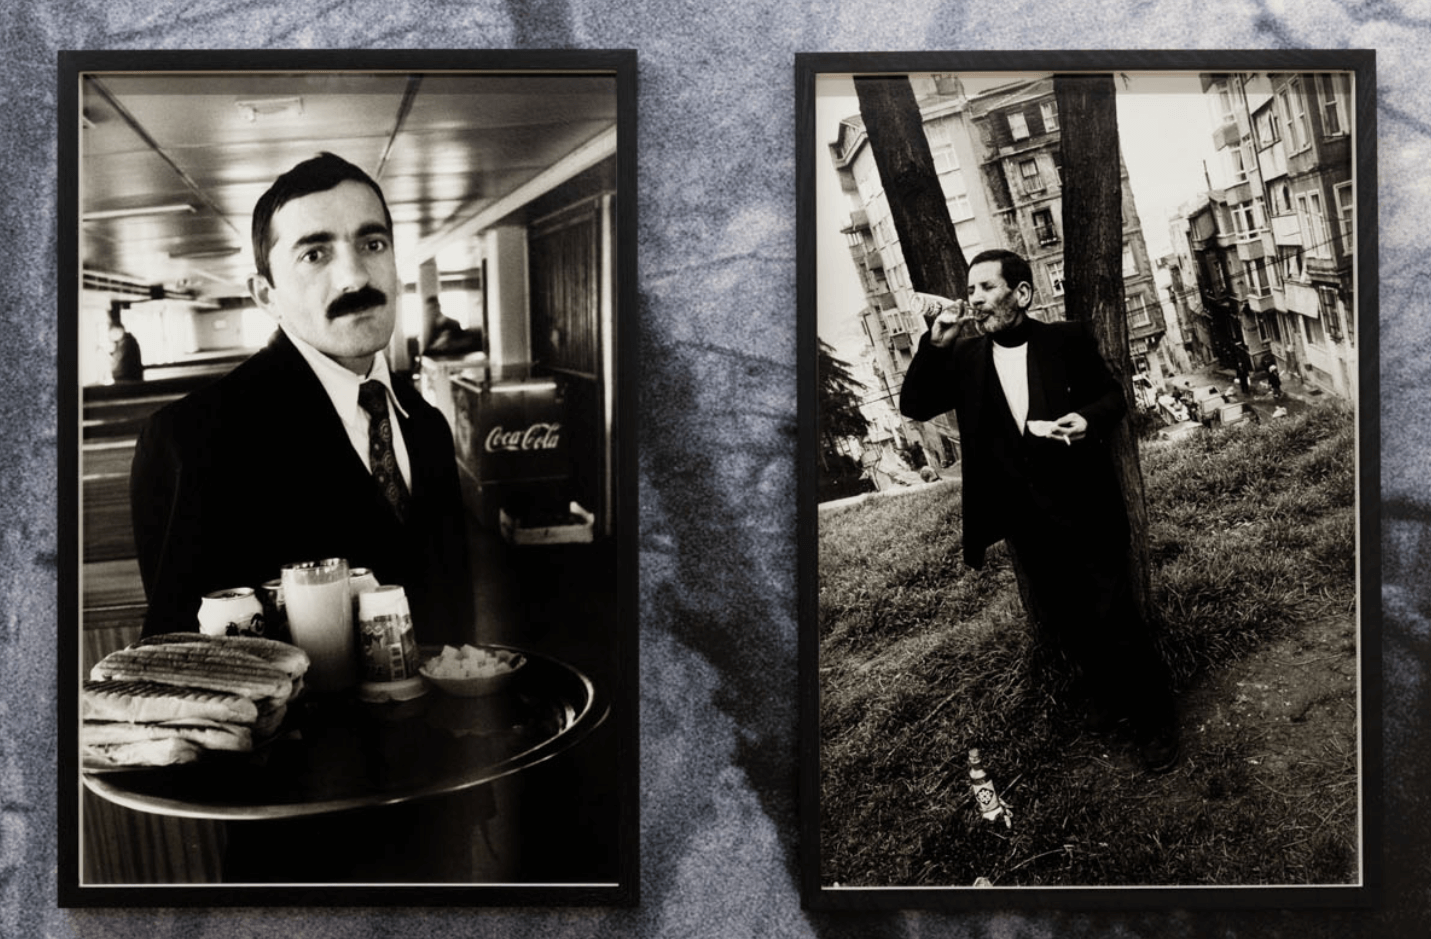 Fouad Elkoury, The Waiter, Marmara Sea (2000) and Tarlabasi, Istanbul (1999)